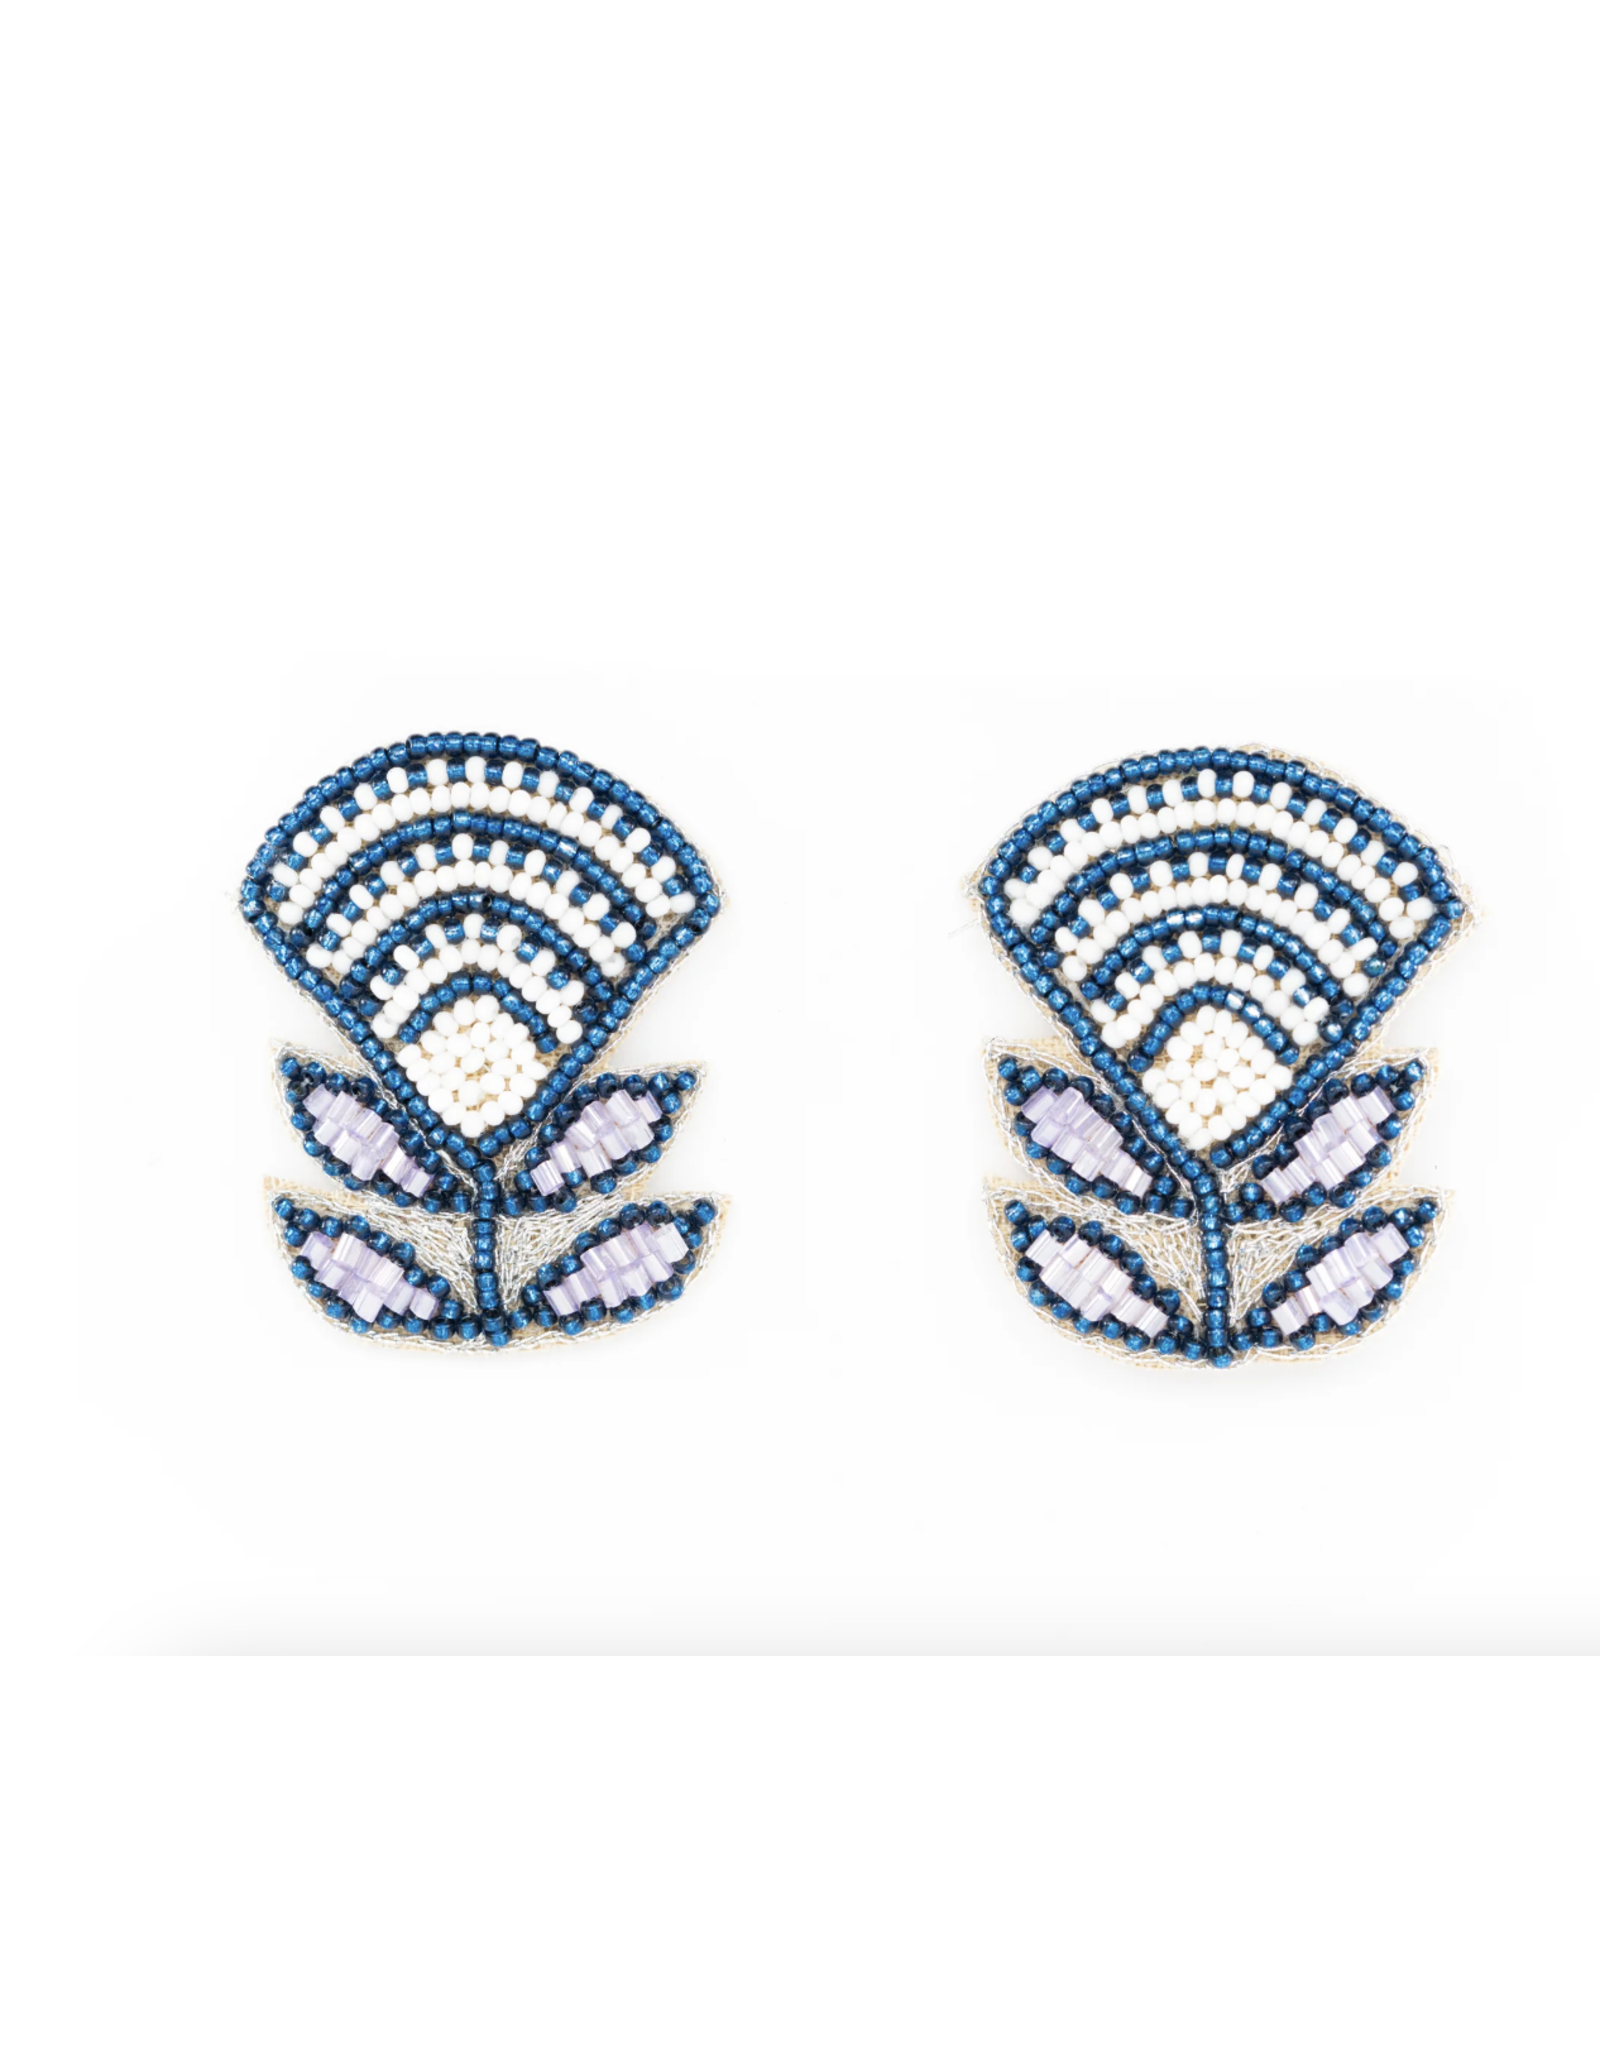 Beth Ladd Collection Block Print Flower Earrings in Navy